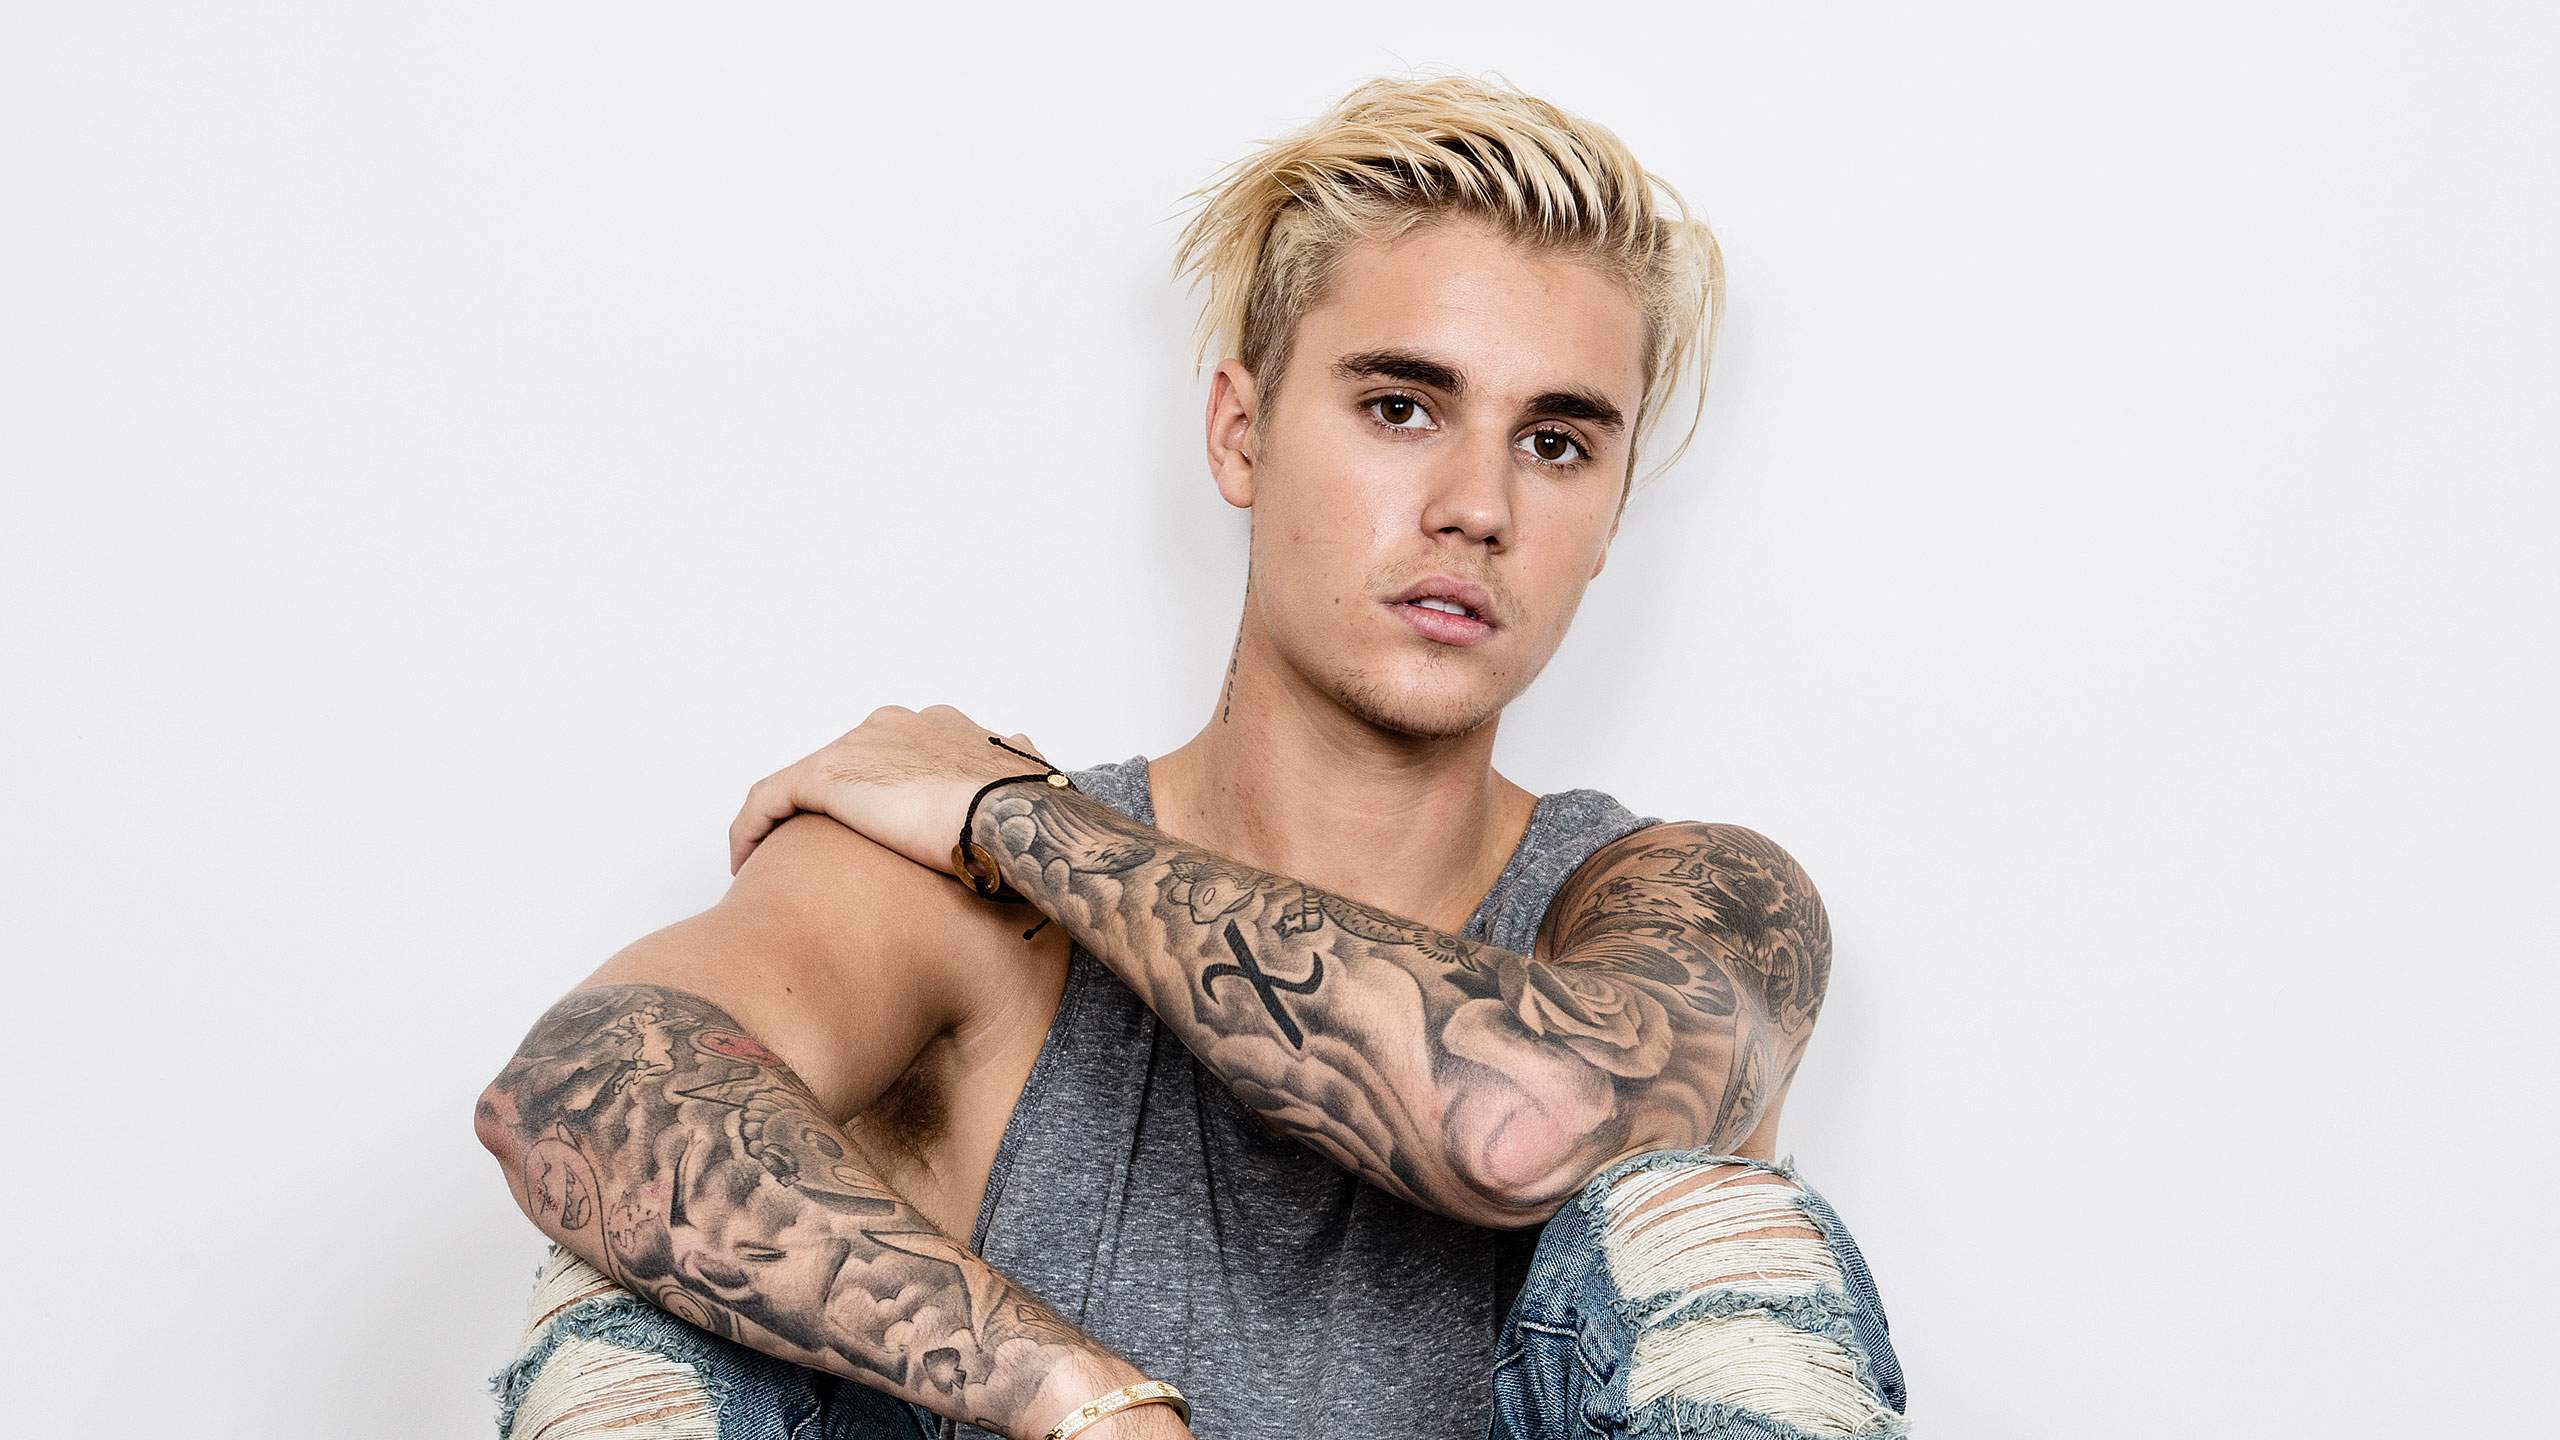 Justin Bieber wallpaper, Music, HQ Justin Bieber pictureK Wallpaper 2019